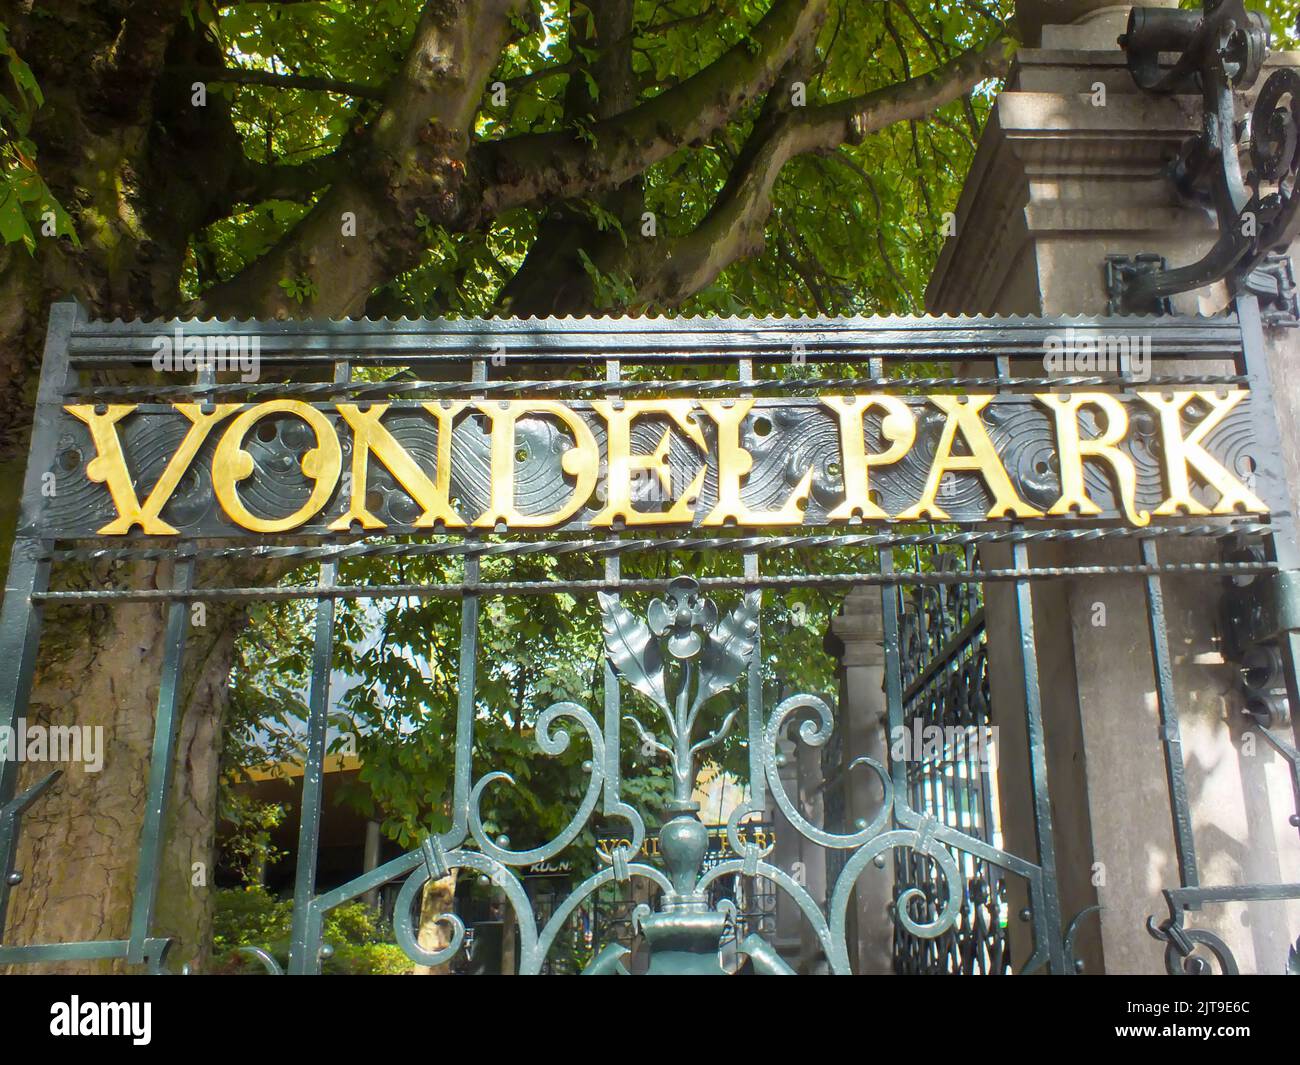 Vondelpark entrance gate in Amsterdam, Netherlands. Dutch public urban park at the city center. Gold letters text. Stock Photo